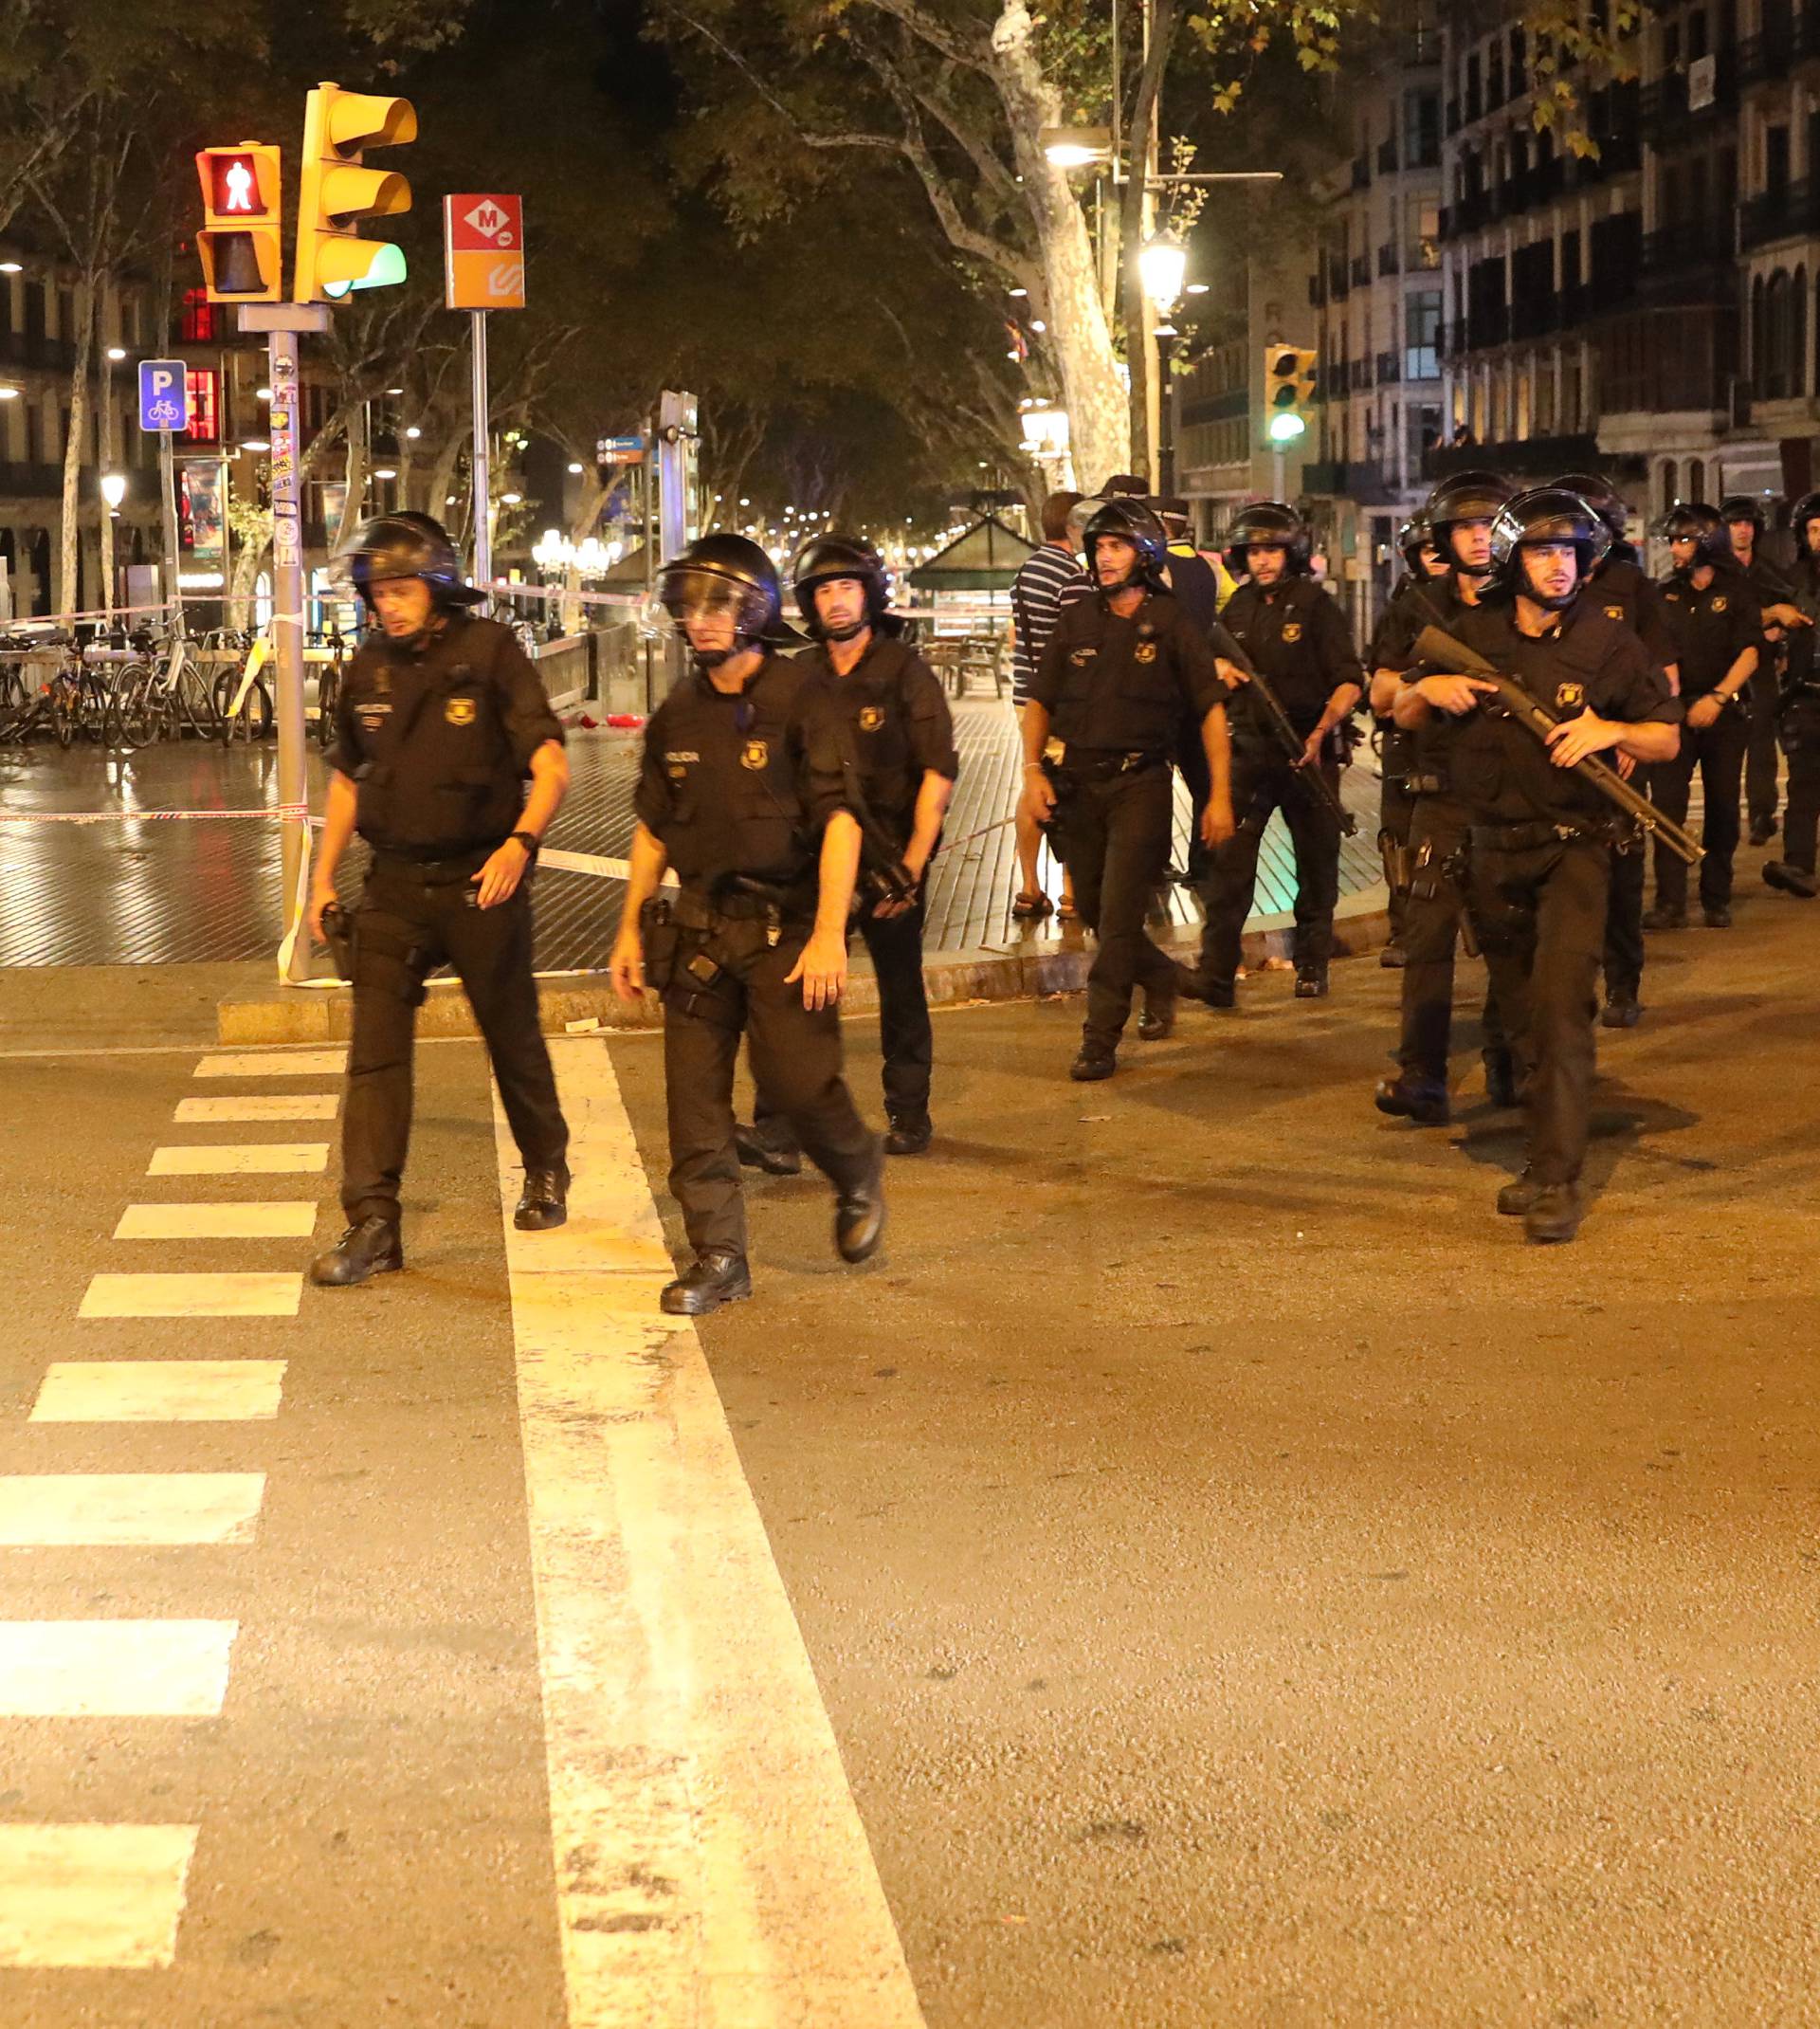 Armed Catalonian Mosses de Escuadra officers leave the area where a van crashed into pedestrians at Las Ramblas in Barcelona